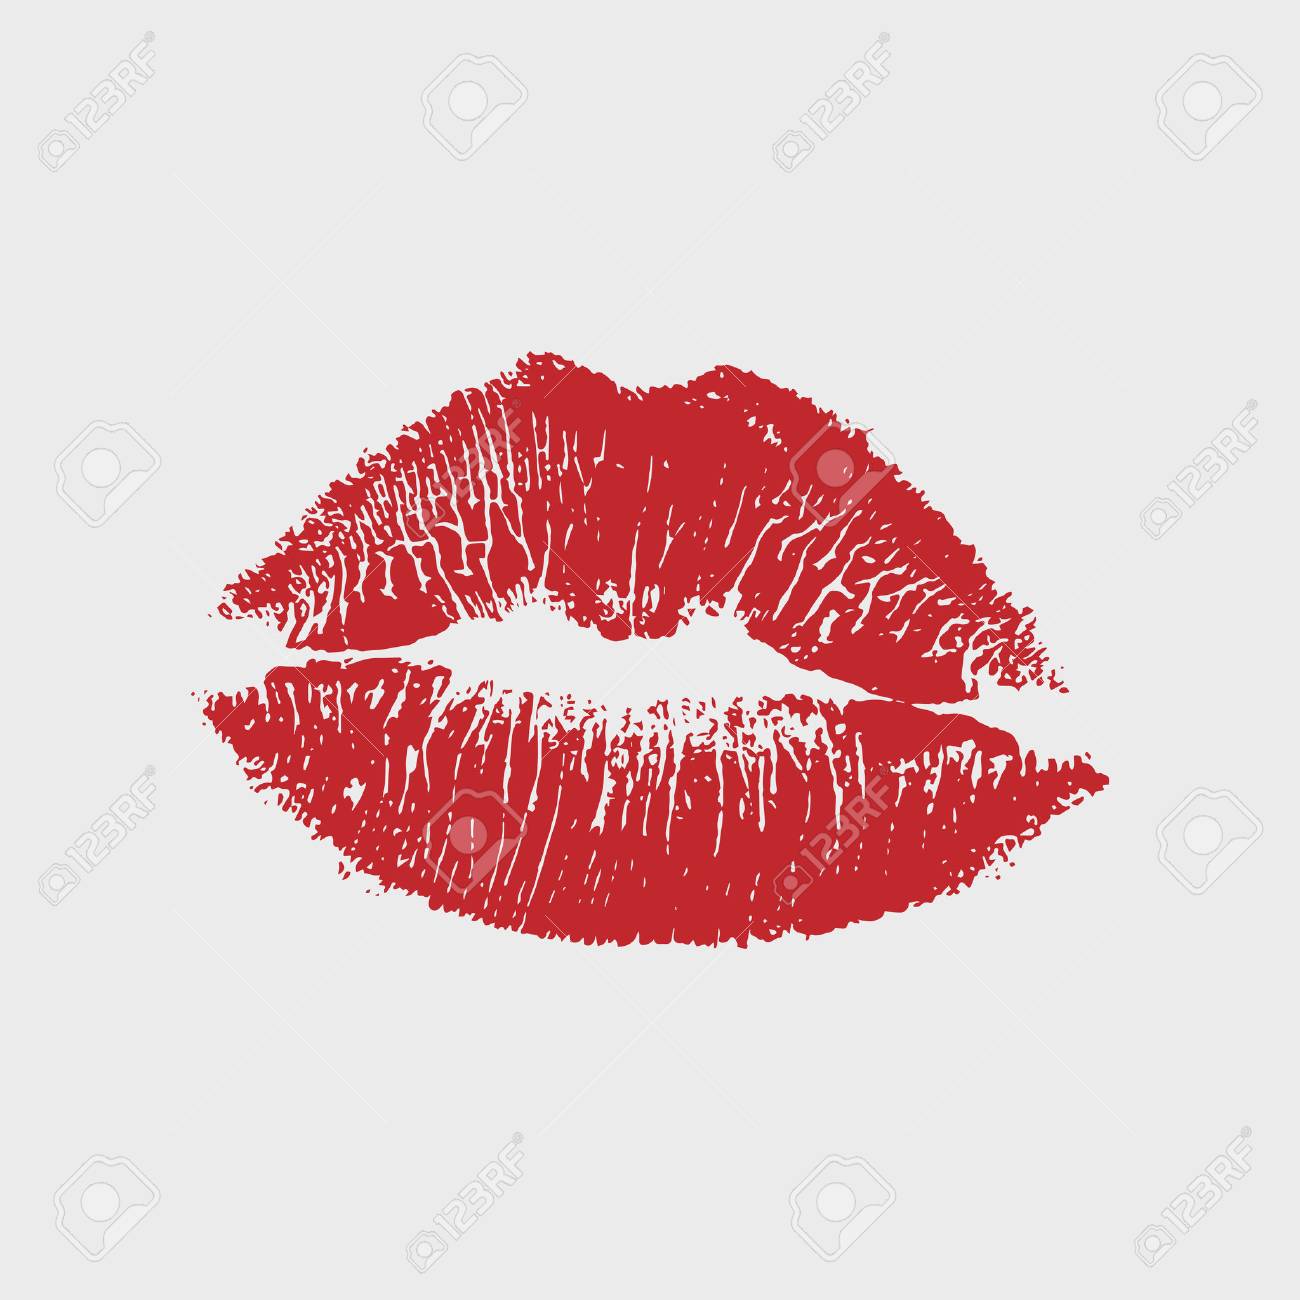 carla lerma share red lips kiss mark photos